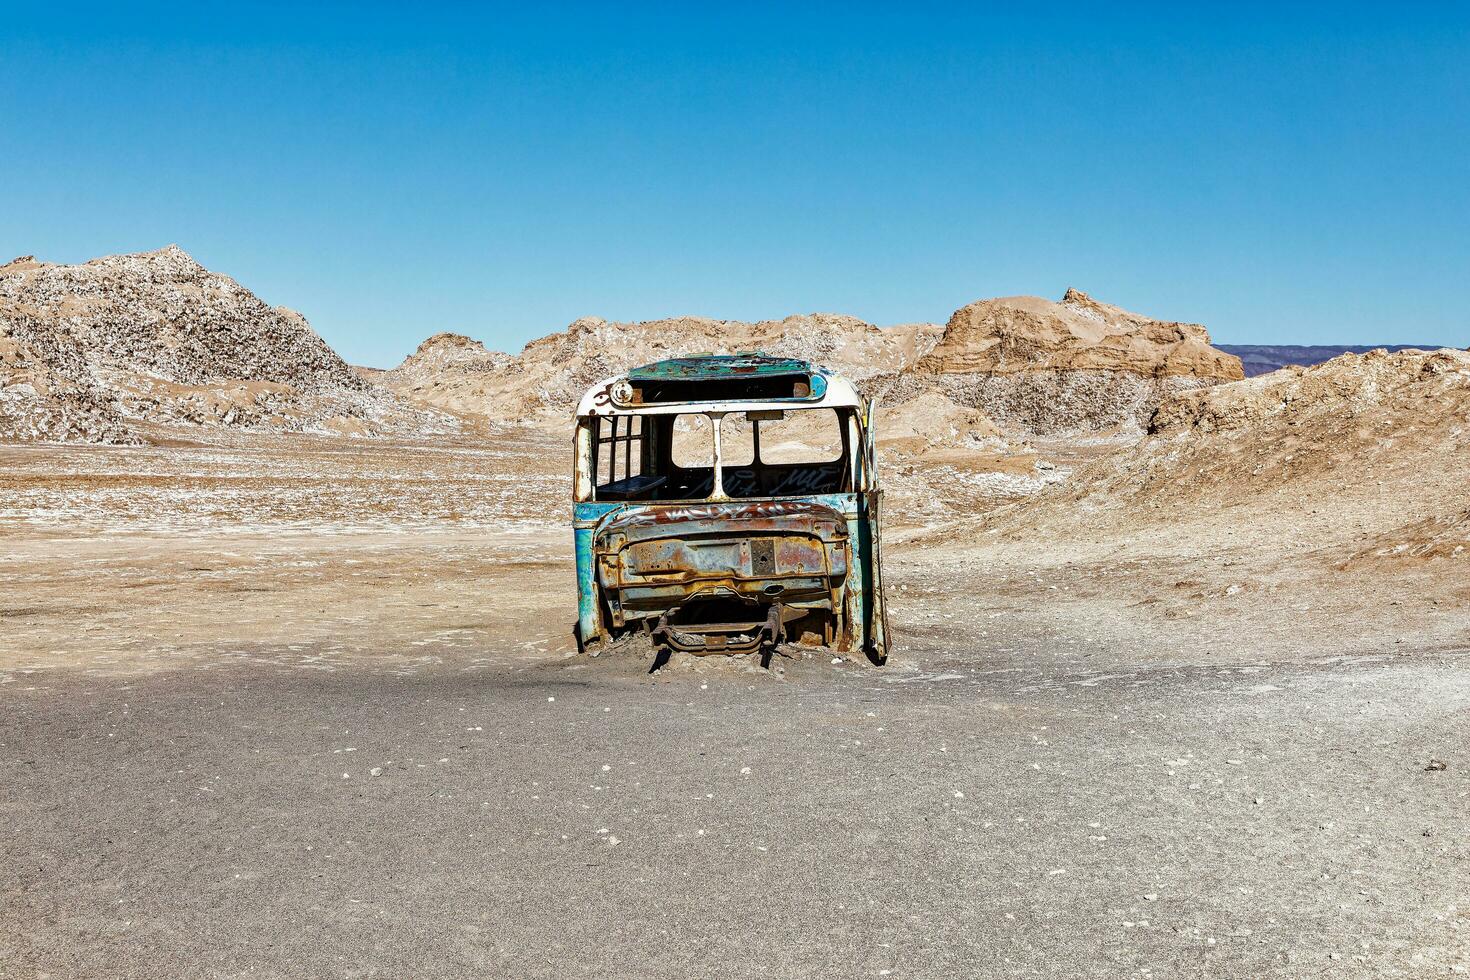 Magic Bus Atacama Desert - San Pedro de Atacama - El Loa - Antofagasta Region - Chile. photo